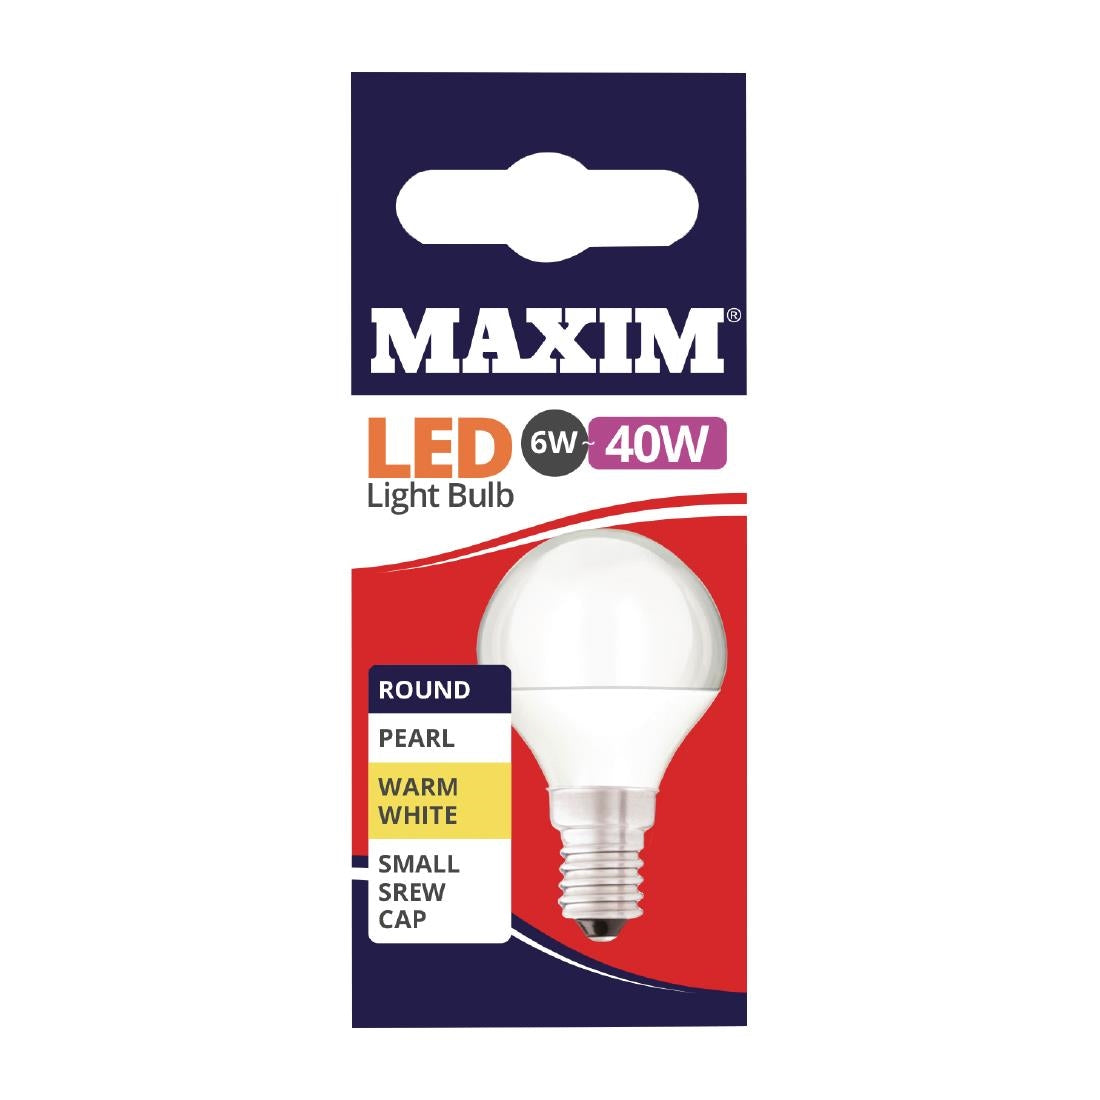 FW511 Maxim LED Round SES Warm White Light Bulb 6/40w JD Catering Equipment Solutions Ltd